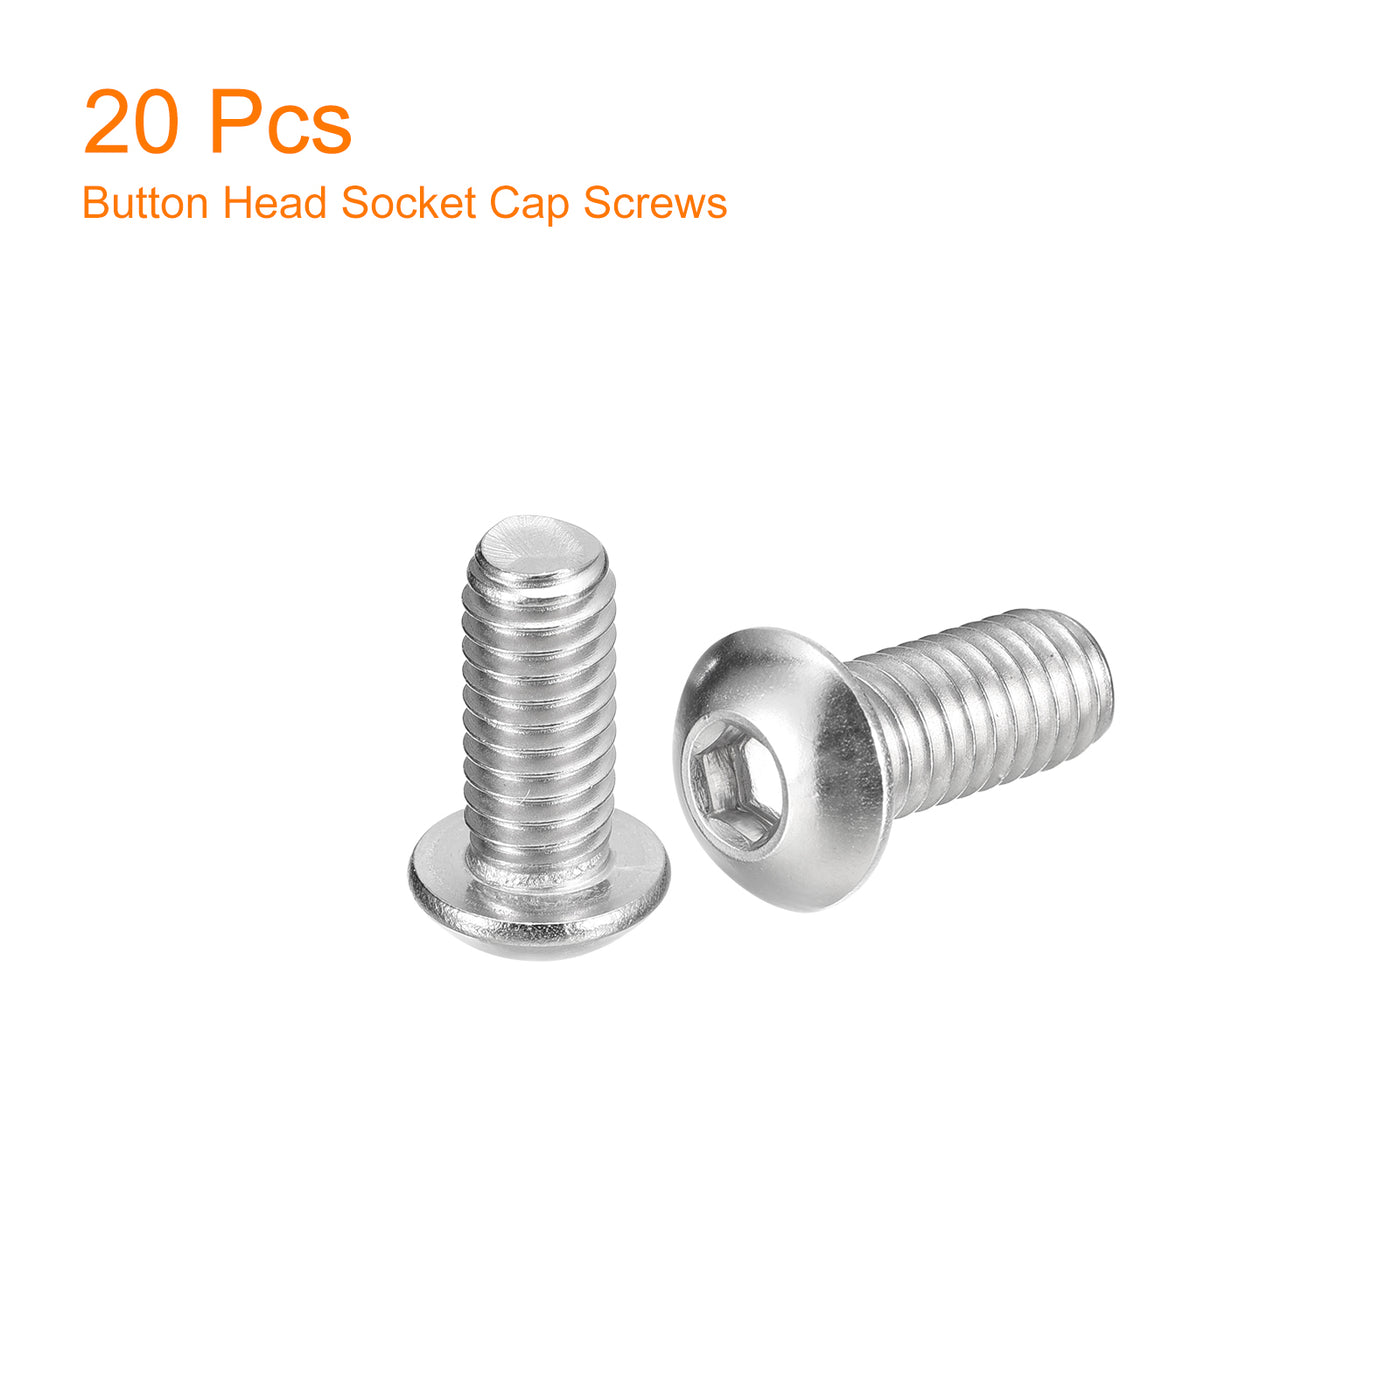 uxcell Uxcell 5/16-18x3/4" Button Head Socket Cap Screws, 20pcs 304 Stainless Steel Screws